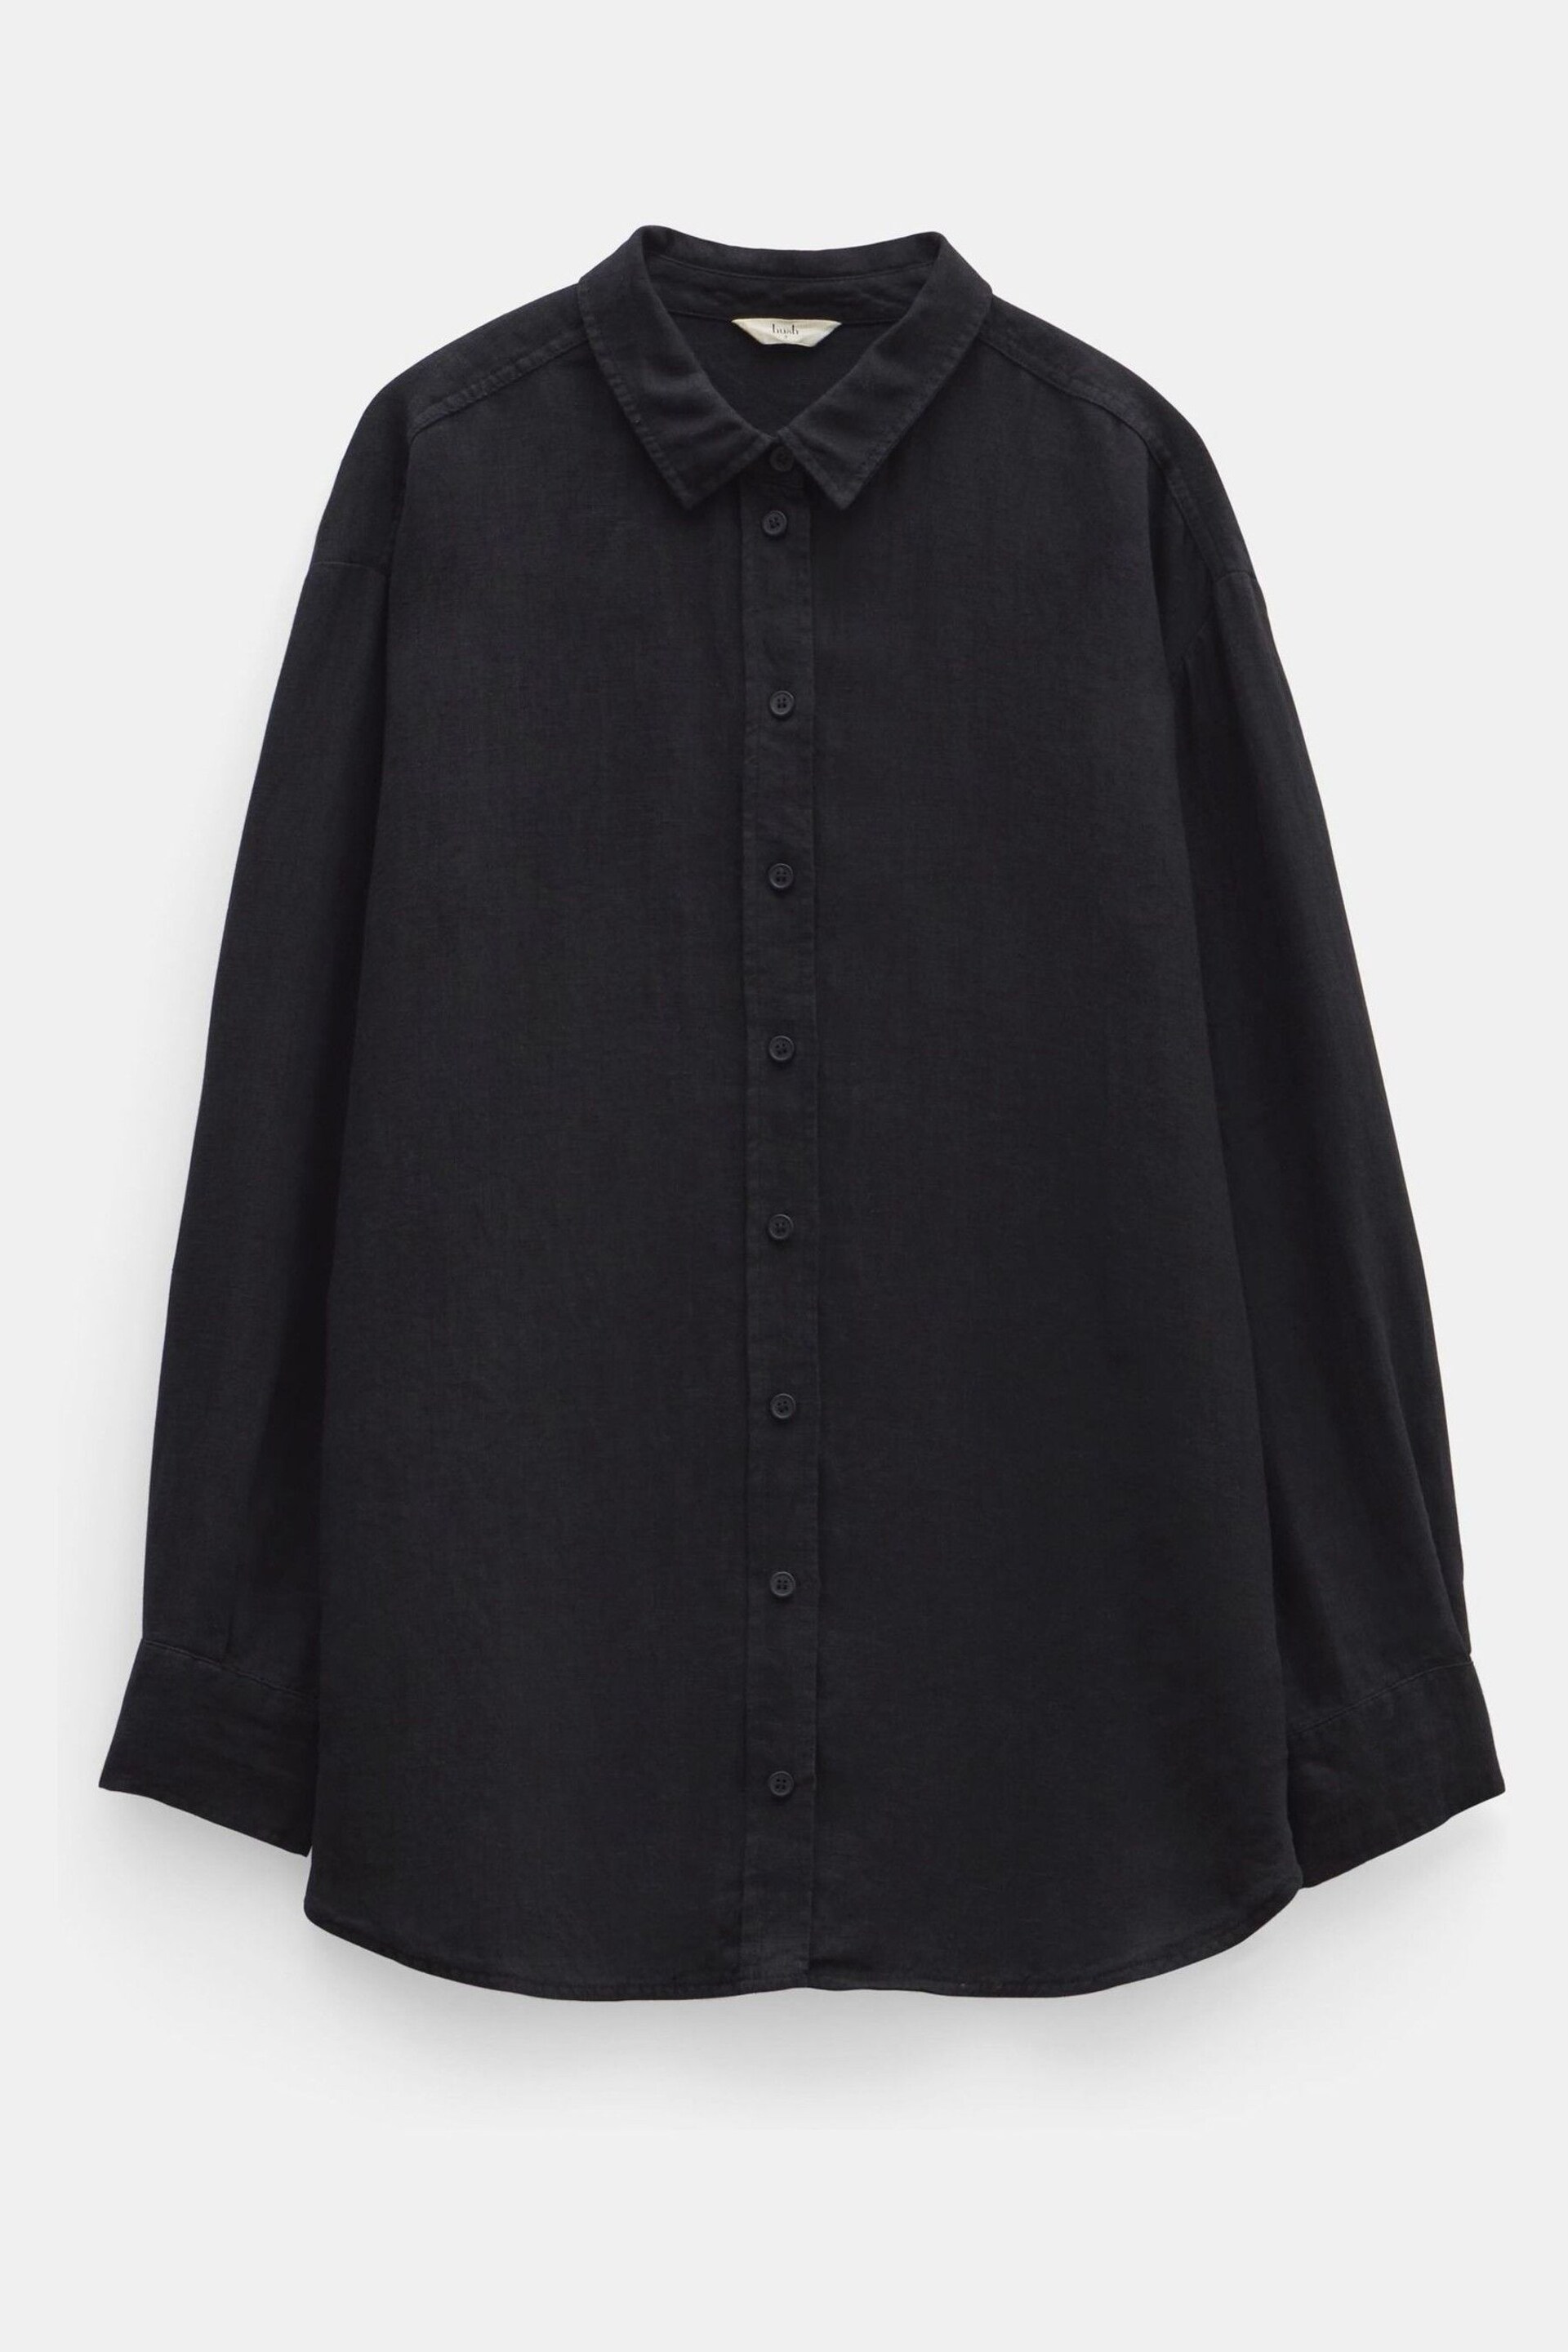 Hush Black Libby Linen Shirt - Image 5 of 5